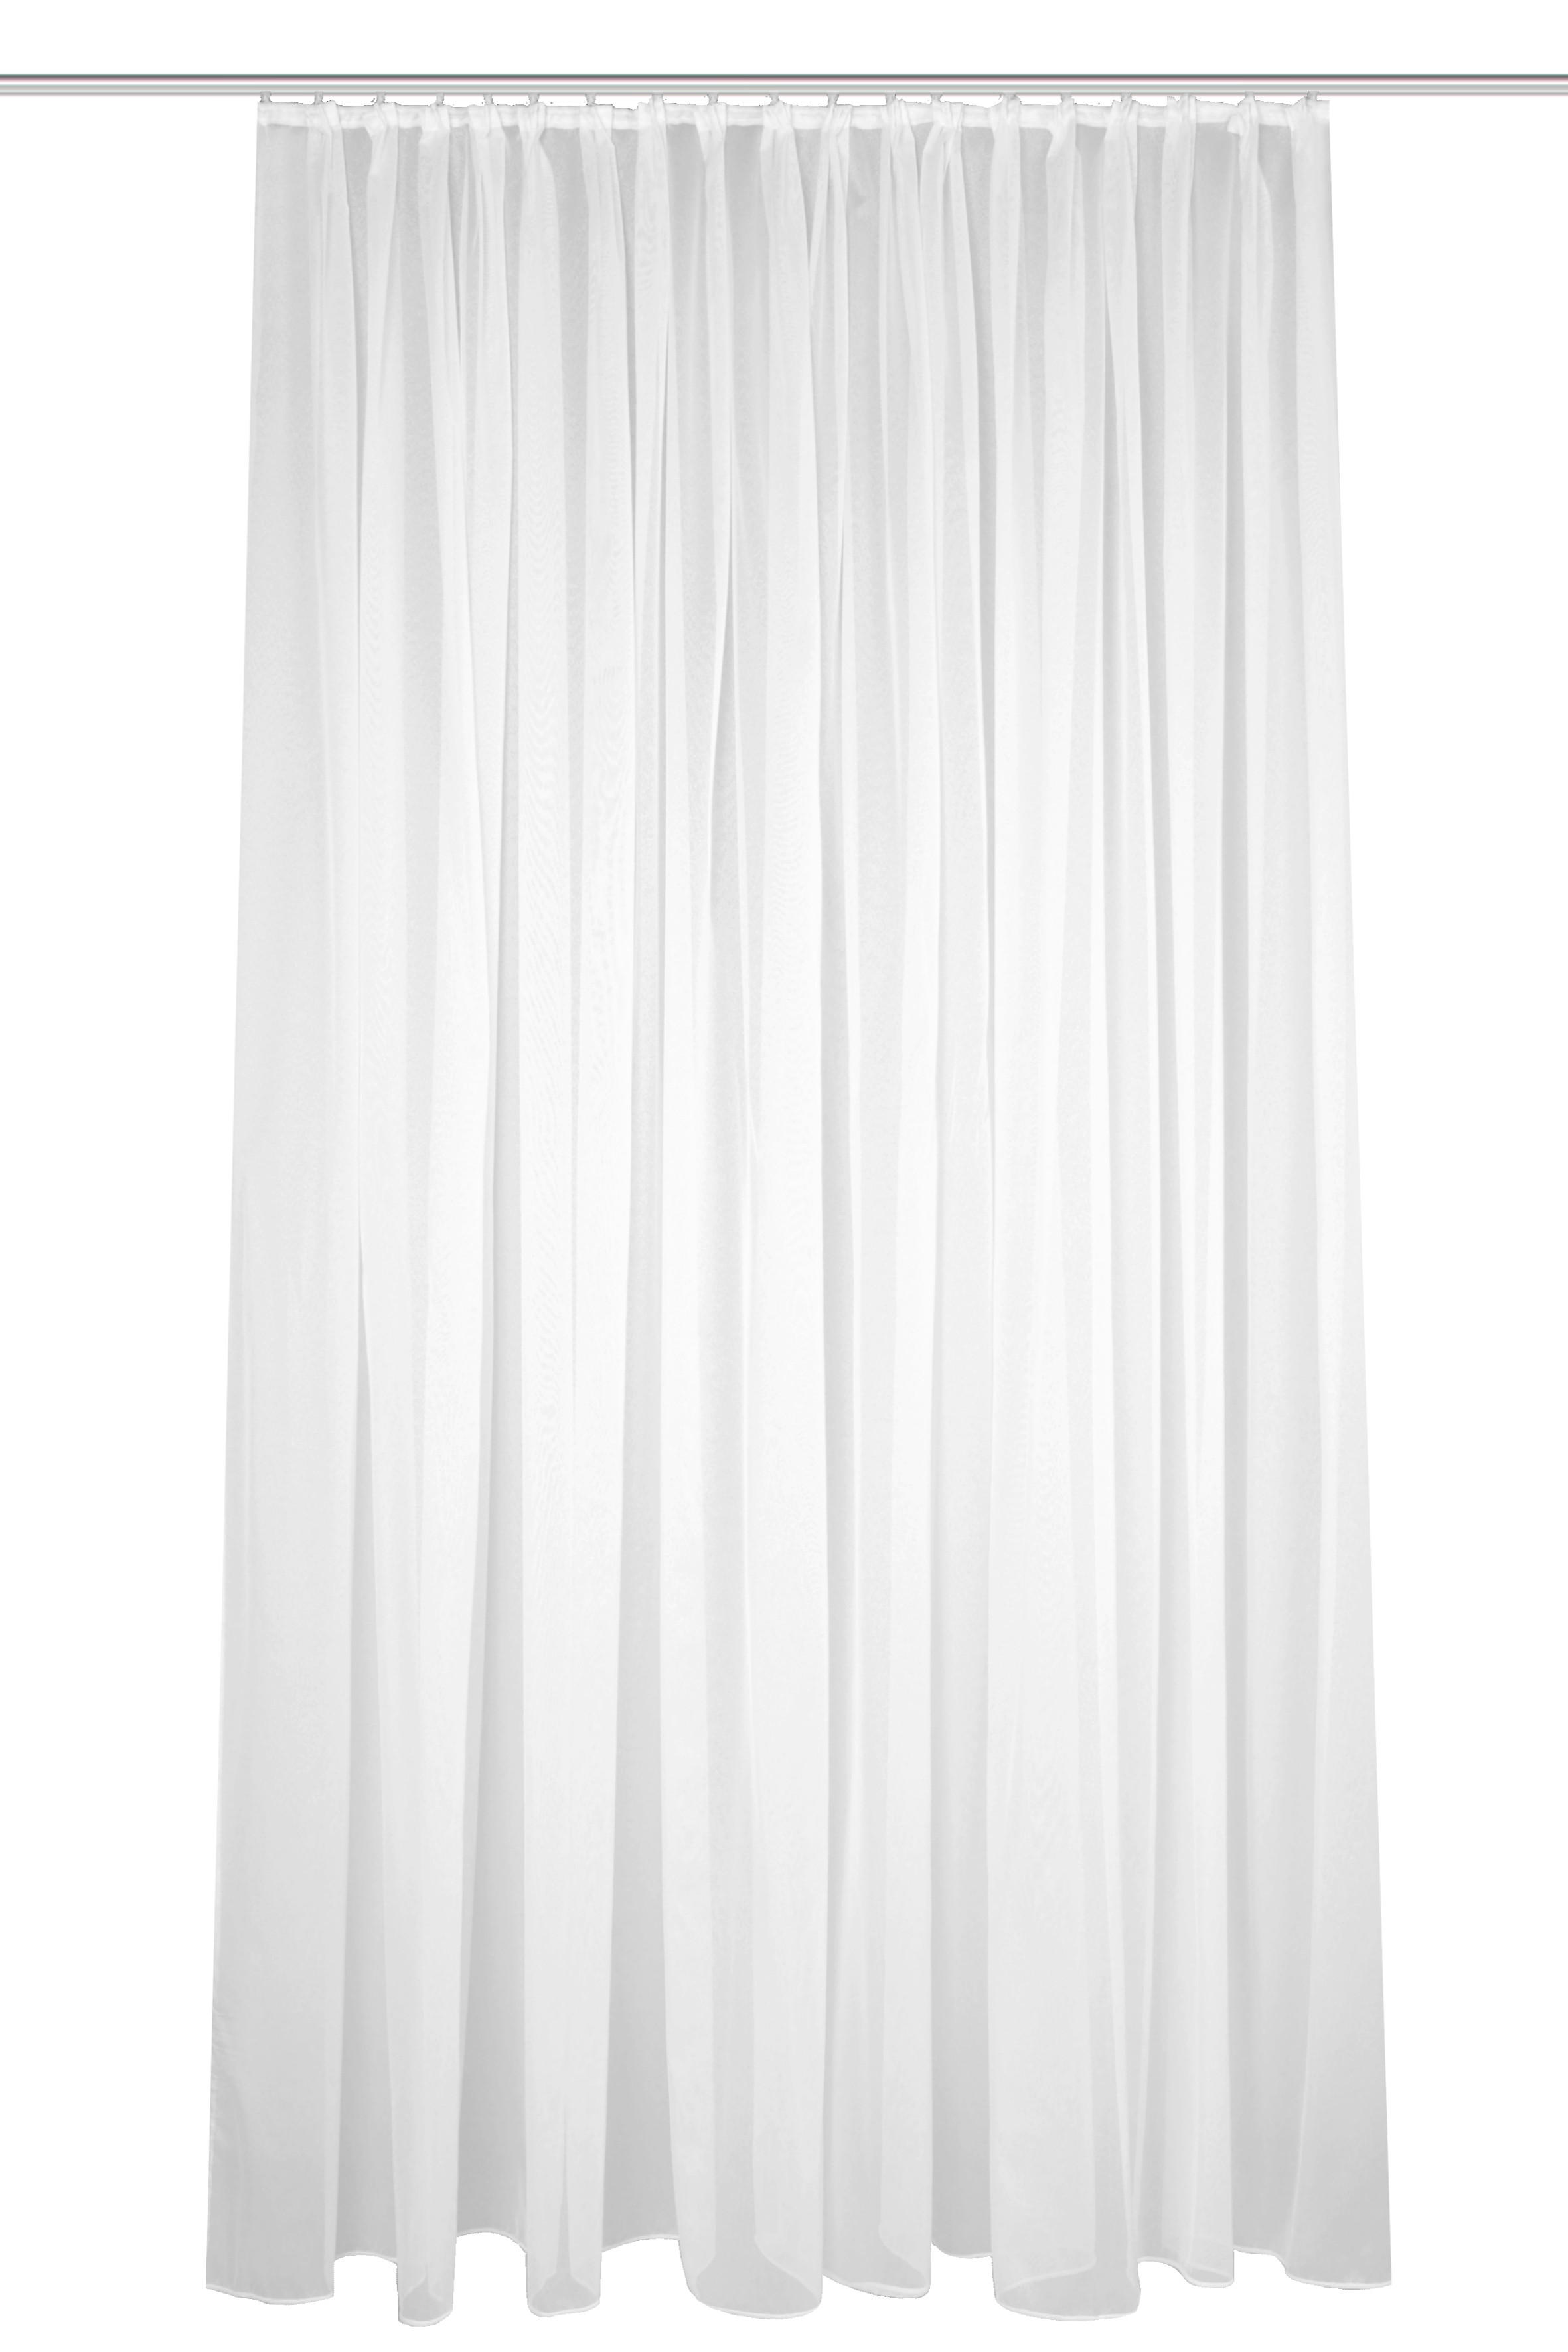 FERTIGSTORE  transparent  450/225 cm   - Weiß, Basics, Textil (450/225cm) - Schmidt W. Gmbh